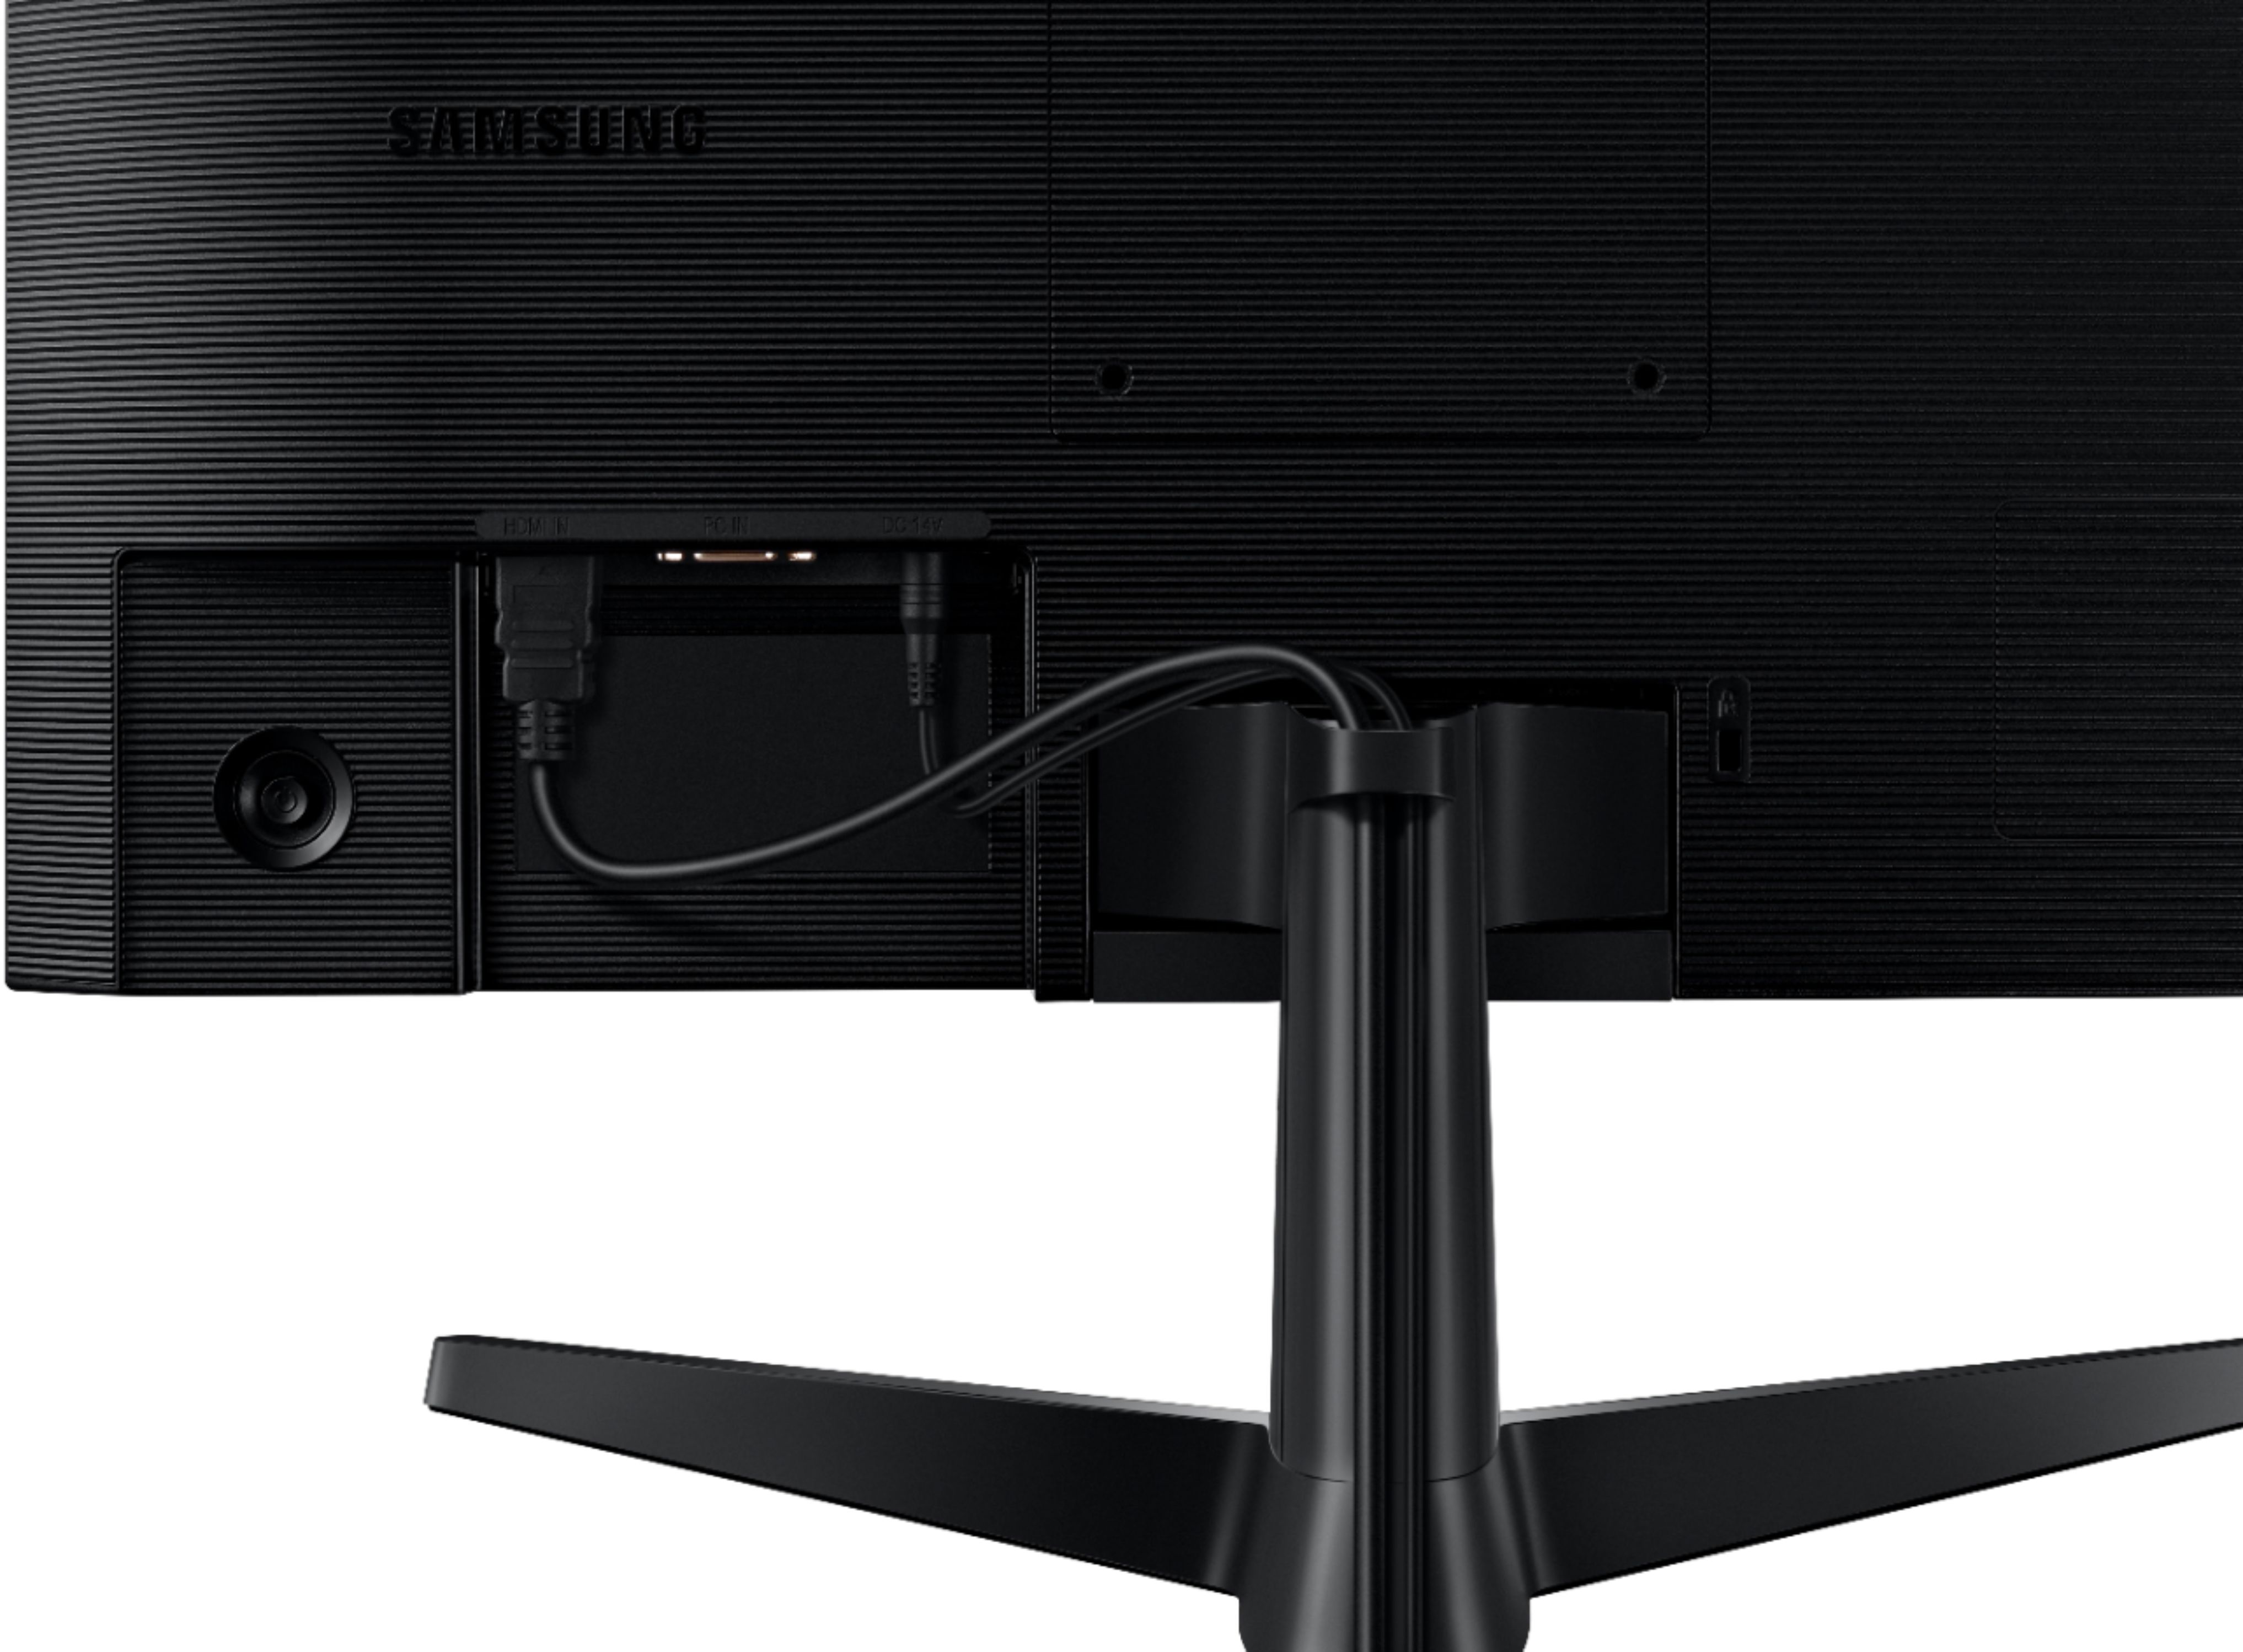 Samsung 24 T350 Series IPS FHD, AMD FreeSync Monitor (VESA, HDMI, VGA)  Dark Blue Gray LF24T350FHNXZA - Best Buy